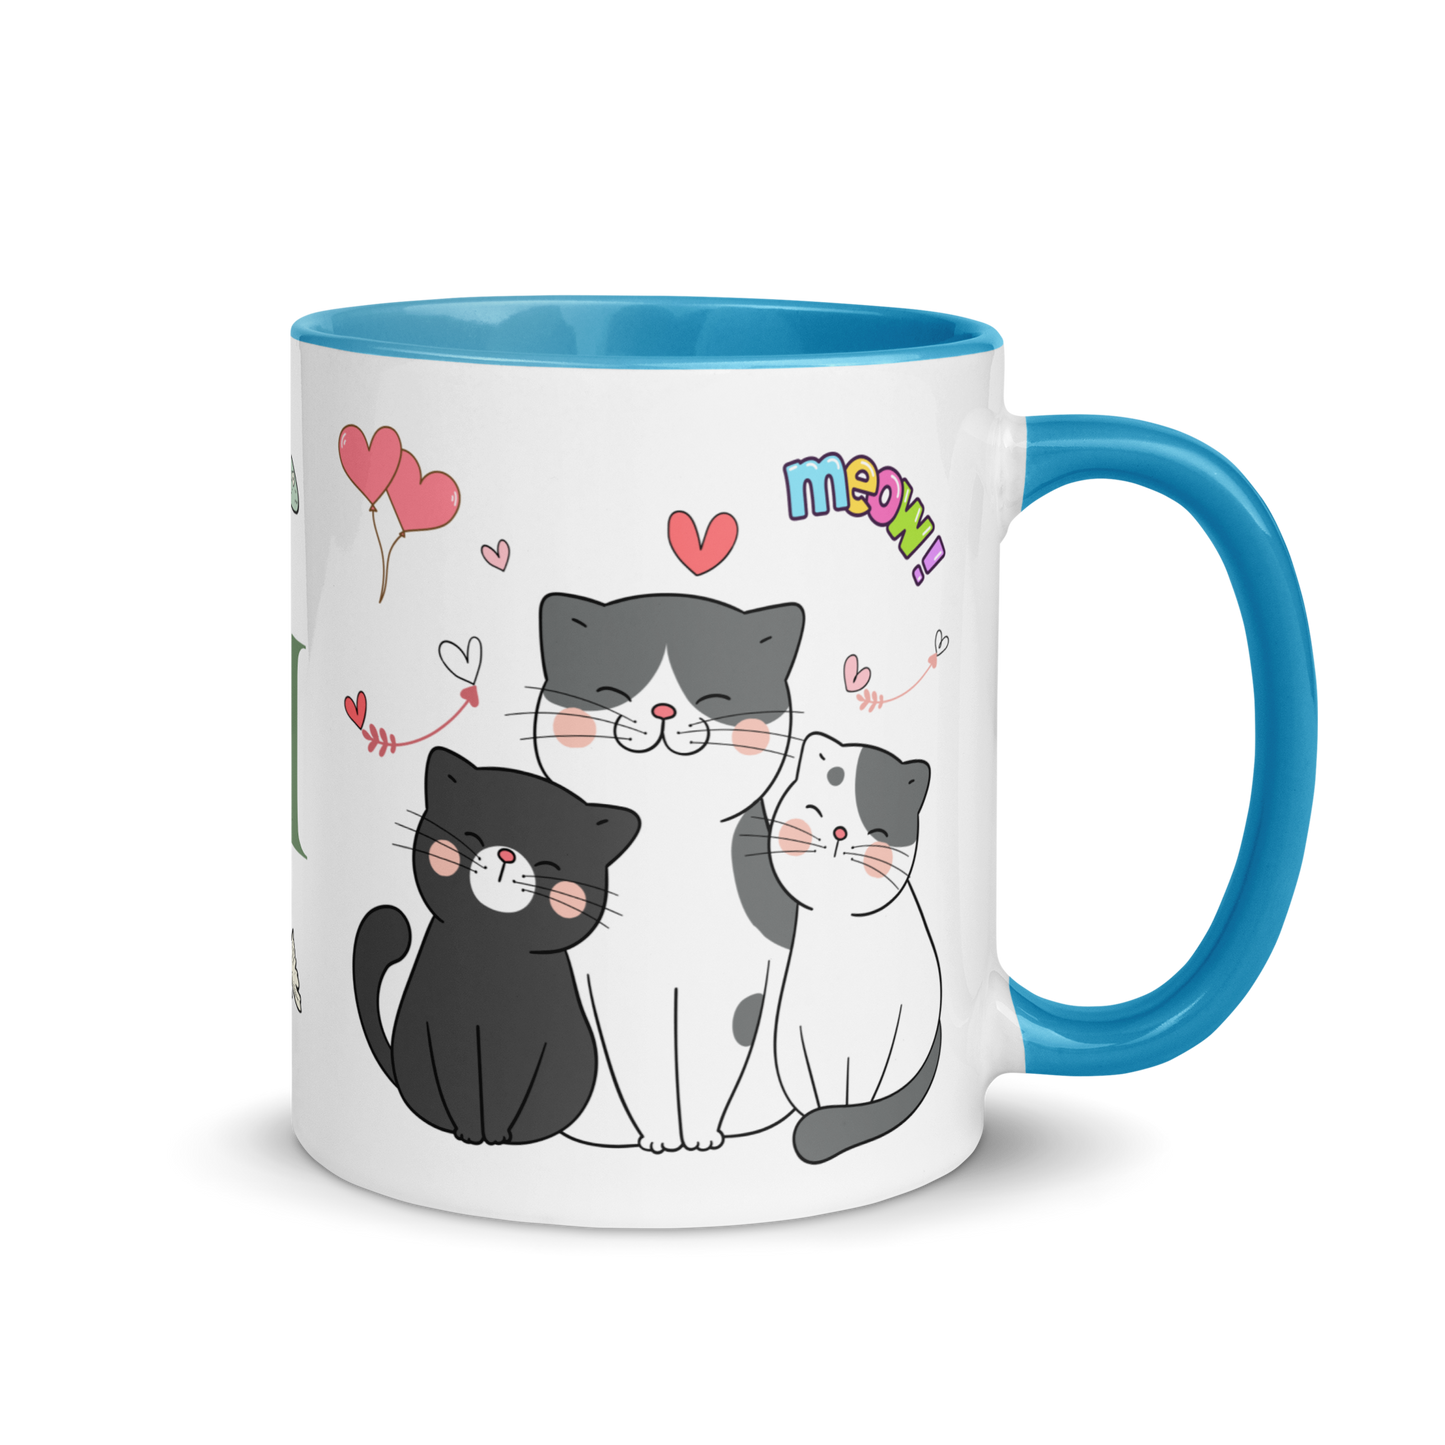 Monogramed Mug 11oz | Adorable Cats Meow Hearts Themed